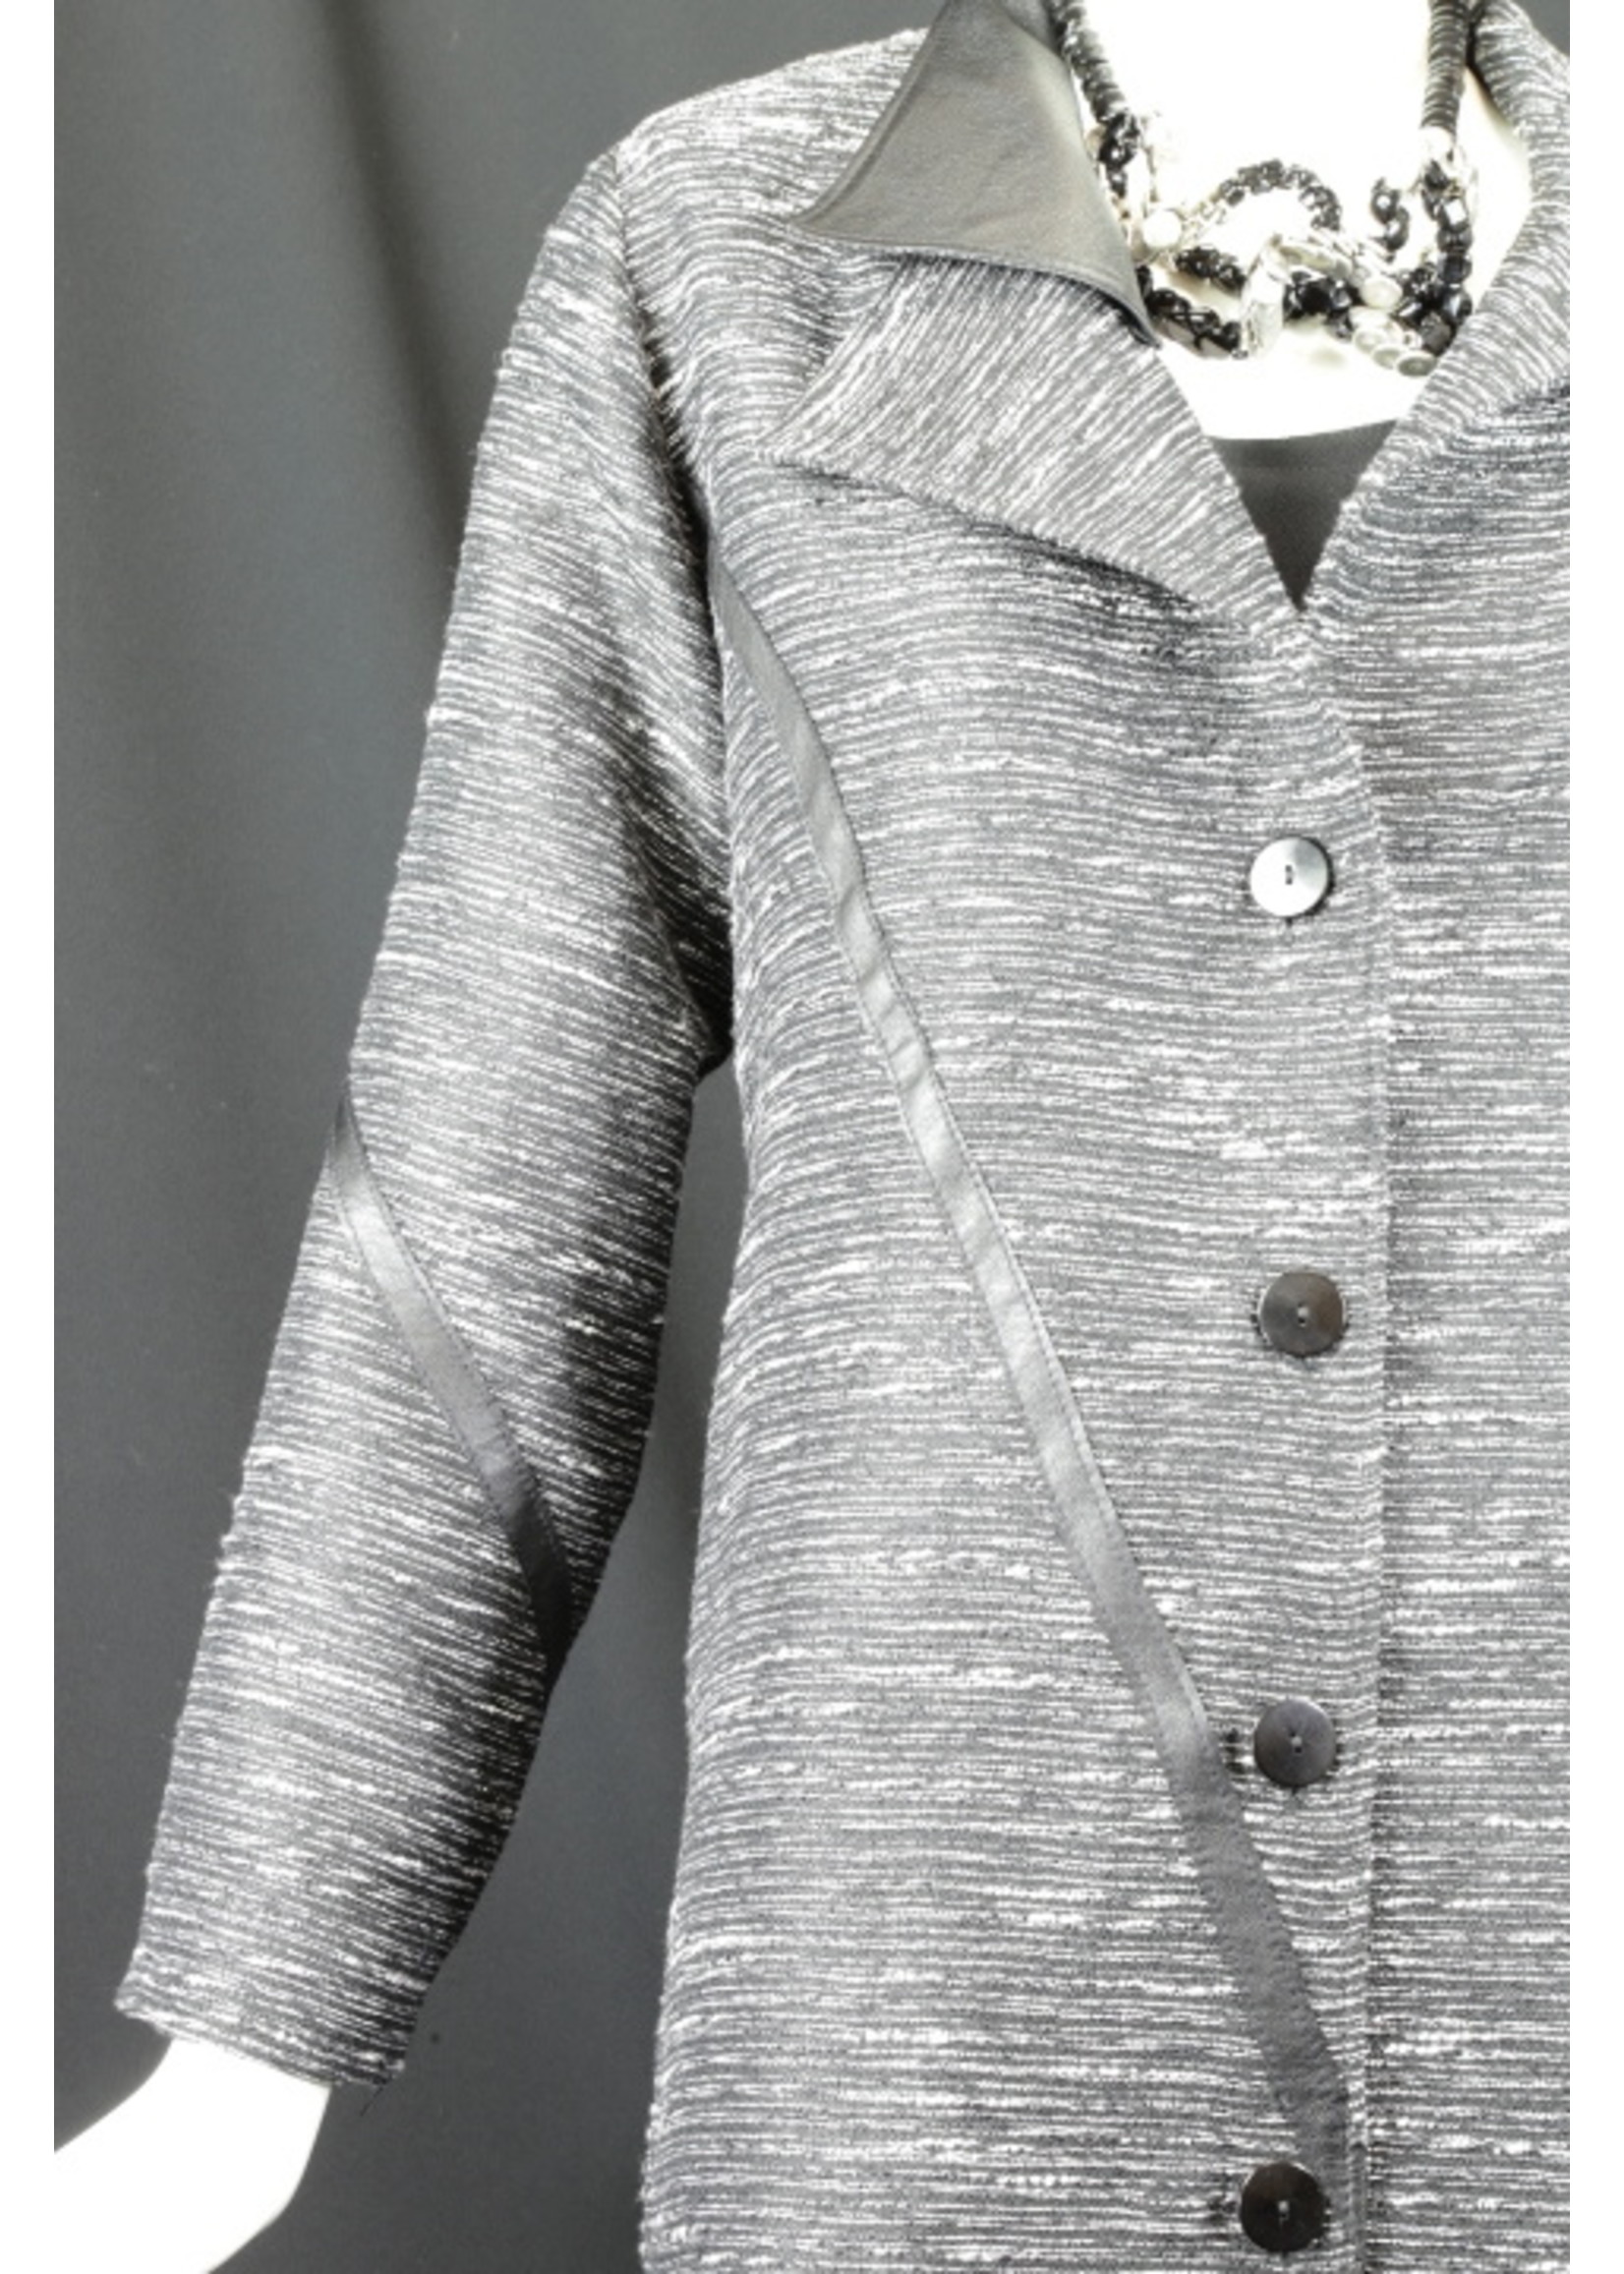 J6148-S2393-M-Double collar Blk/wht Silk Matka W/ Leather Stripes Jacket -M-